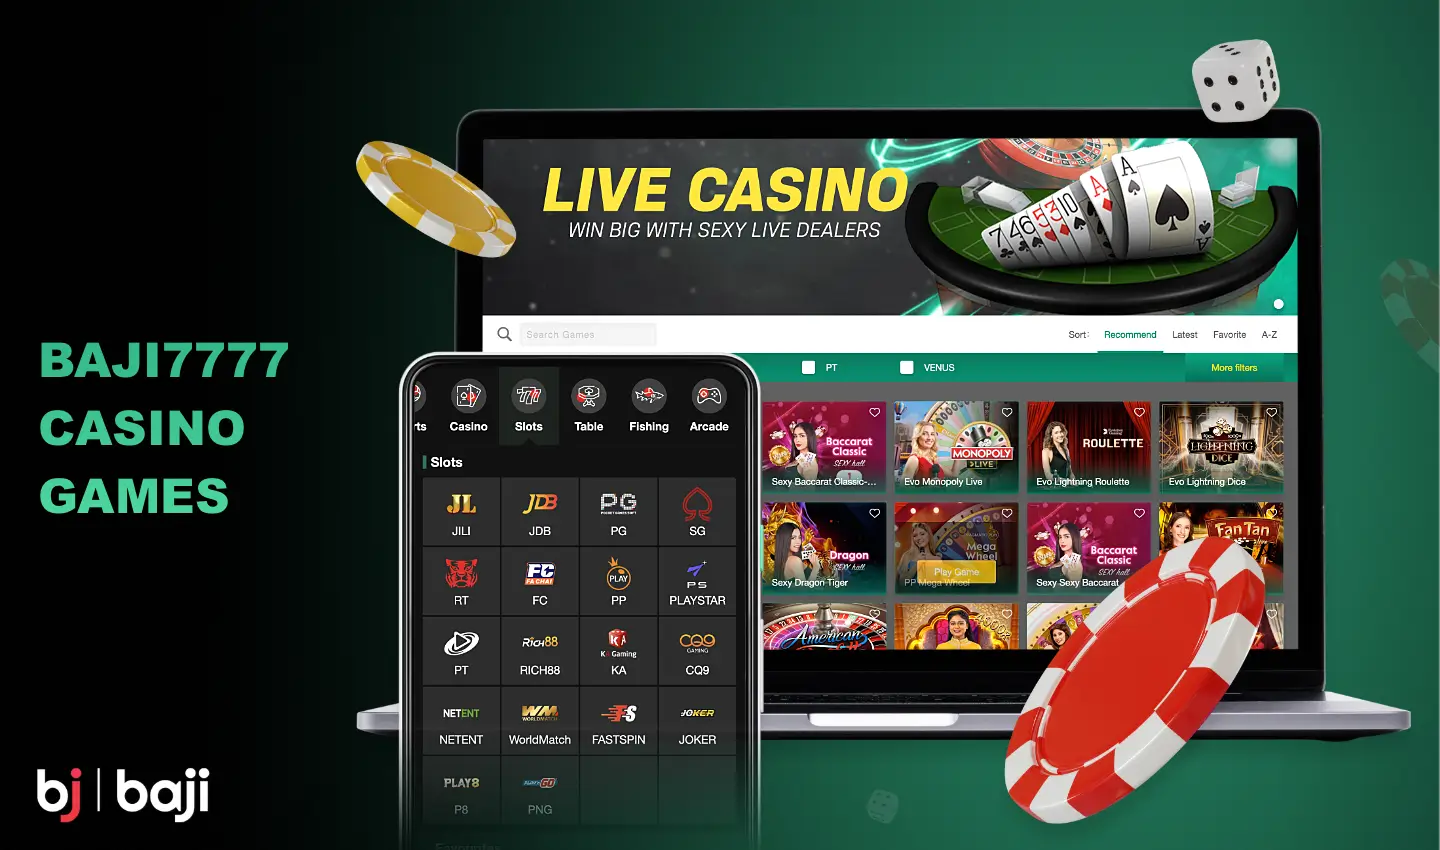 Baji 777 offers its users an abundance of interesting casino games